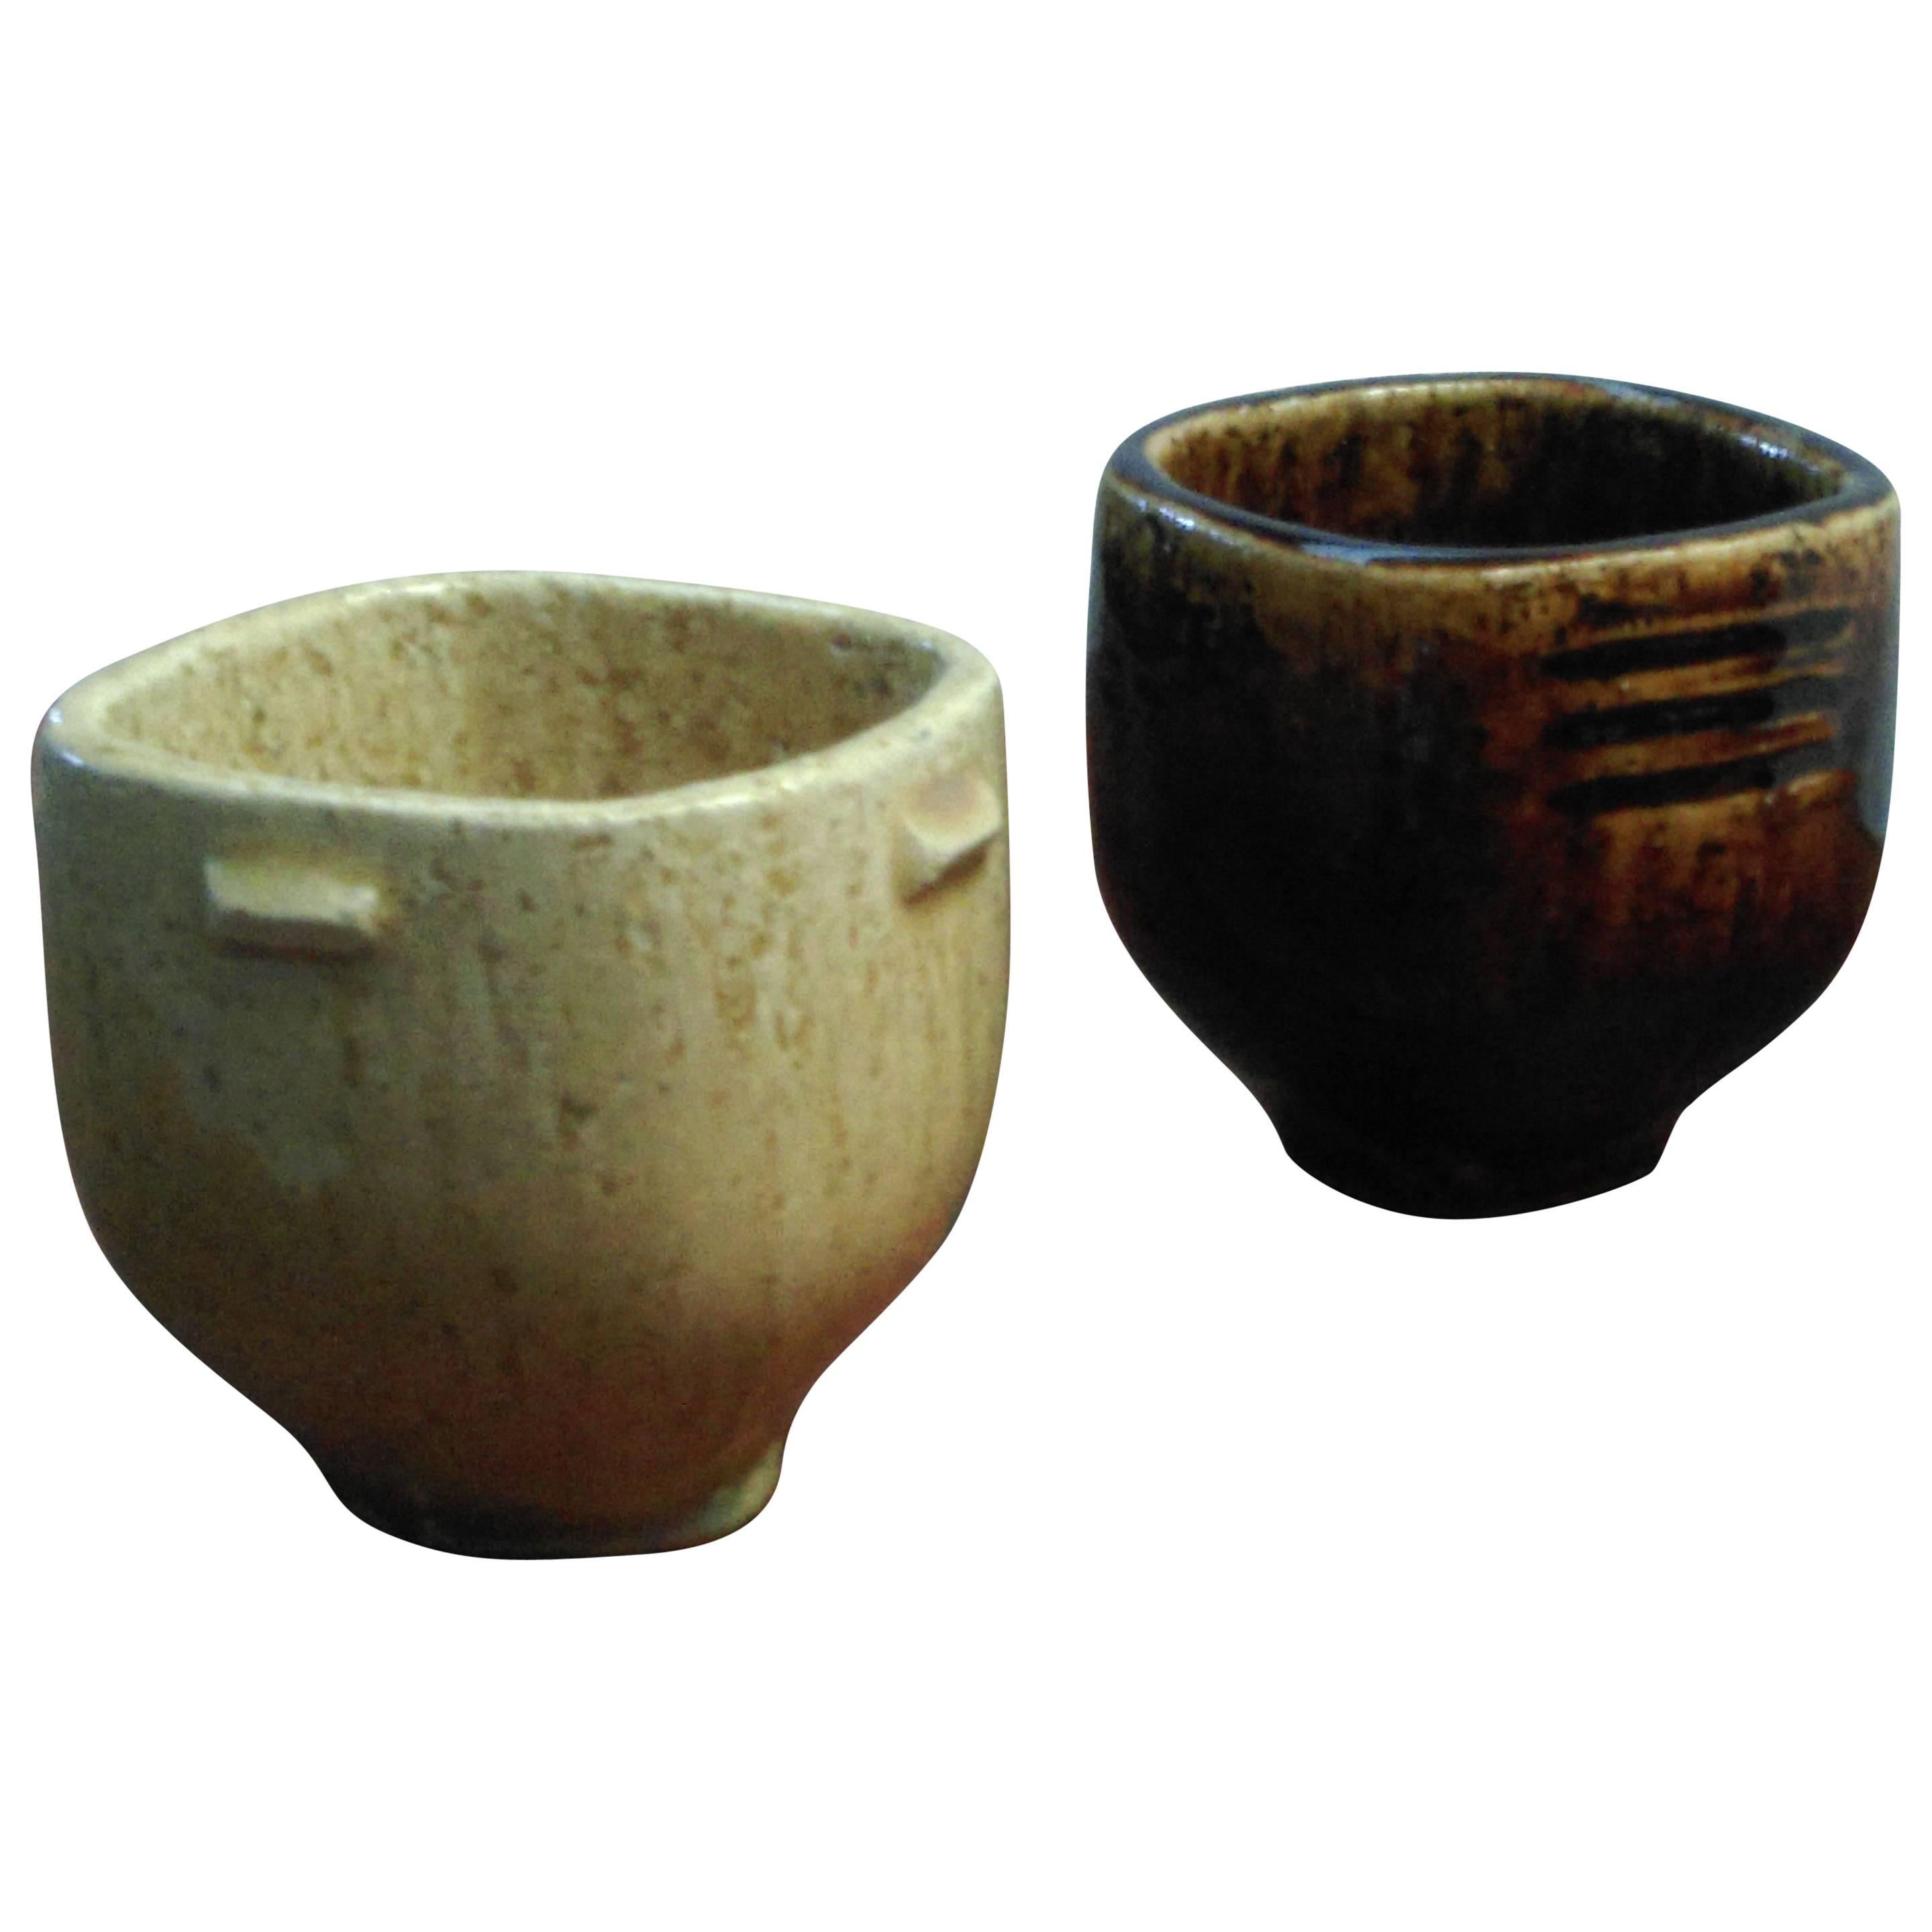 1970s Per Linnemann-Schmidt Pair of Miniature Stoneware Bowls from Palshus